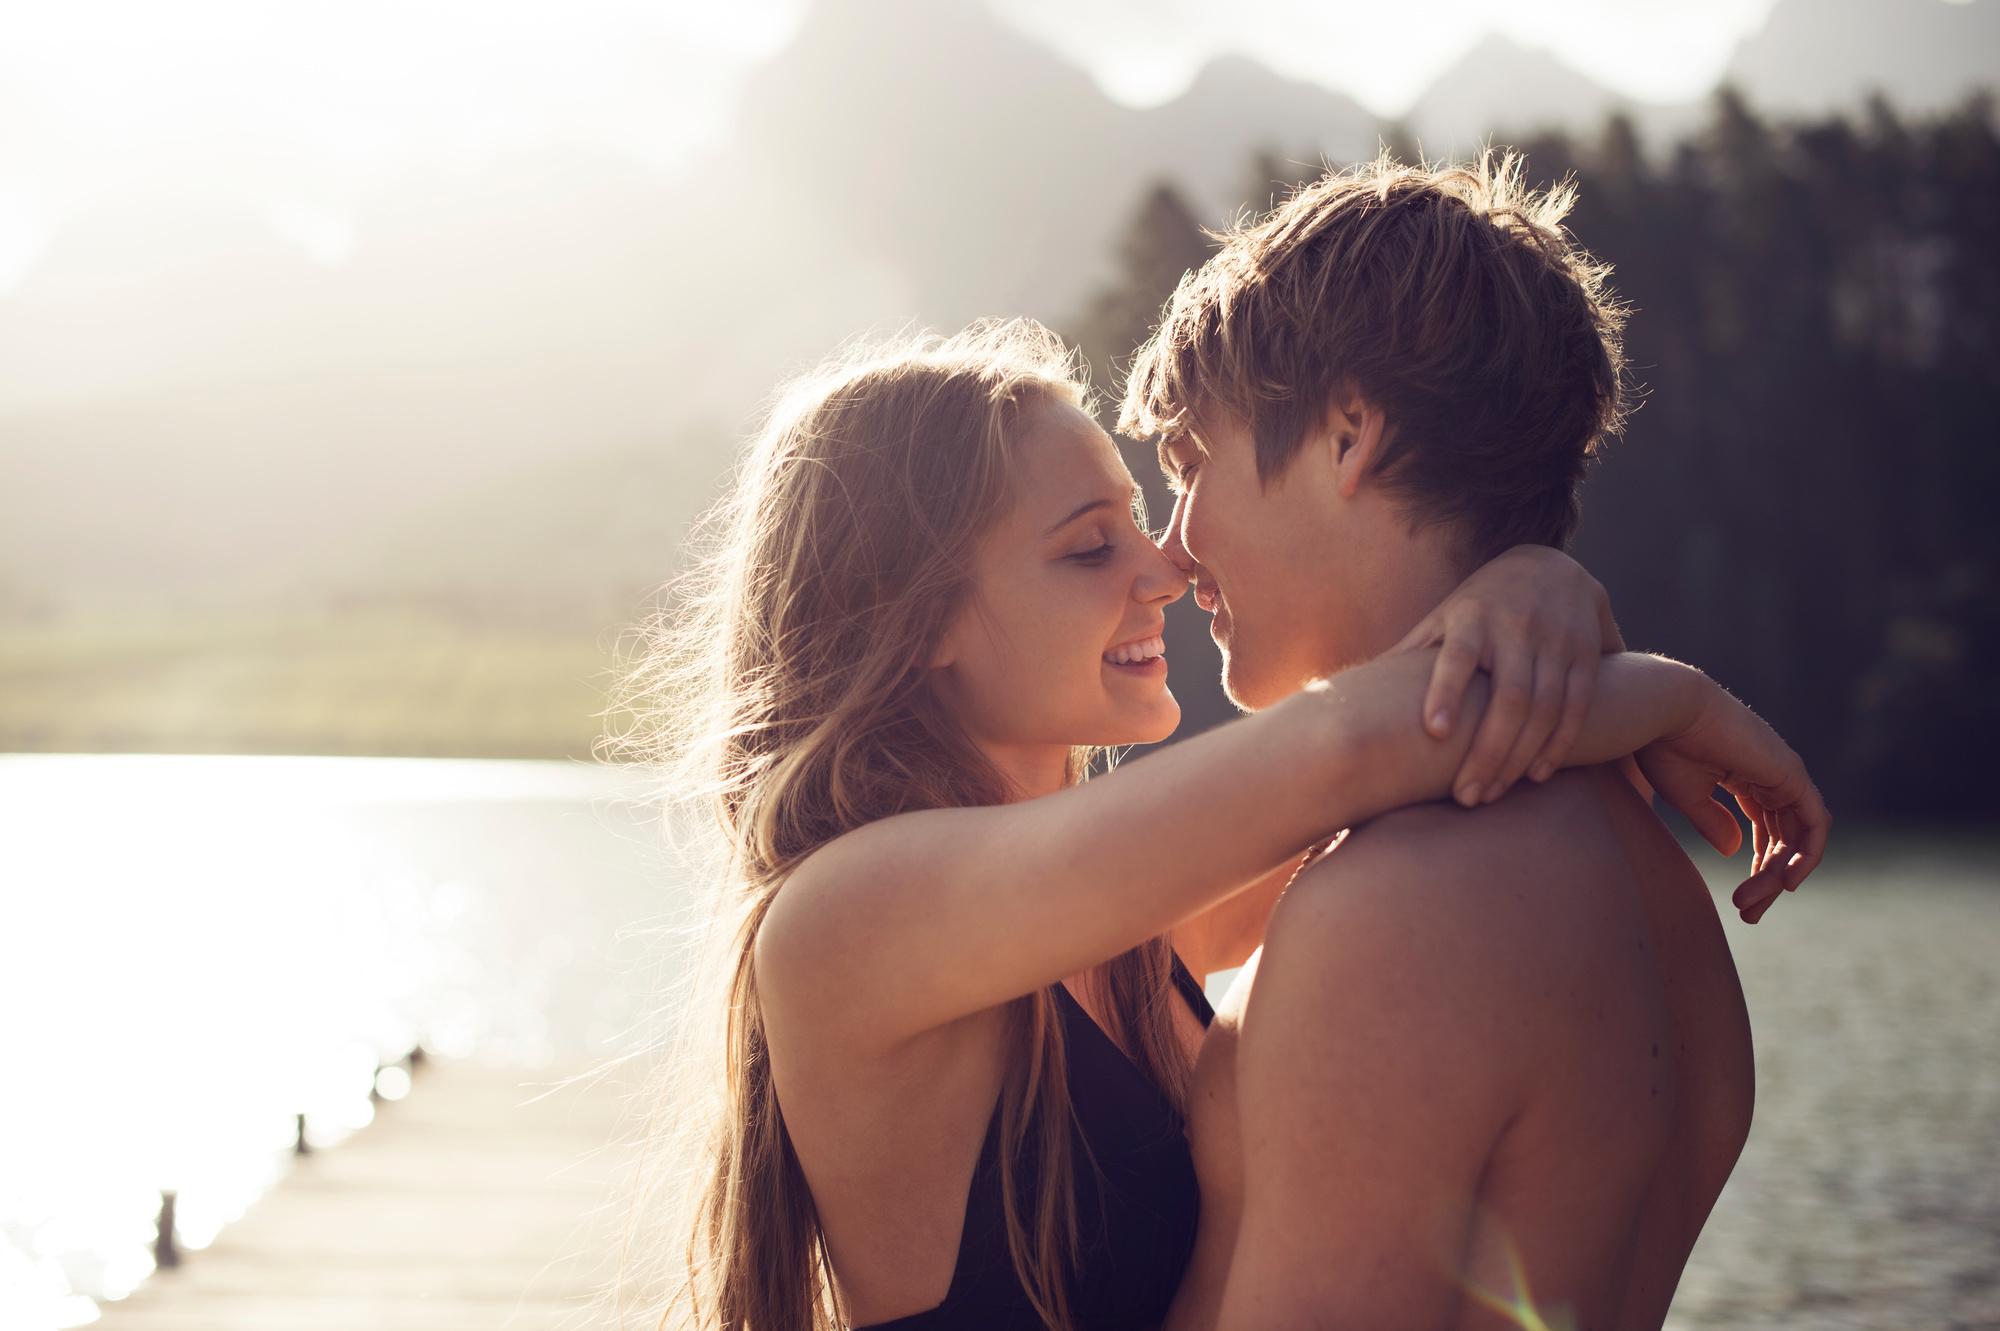 Summer, eternal season of love?  The opinion of 3 sexologists